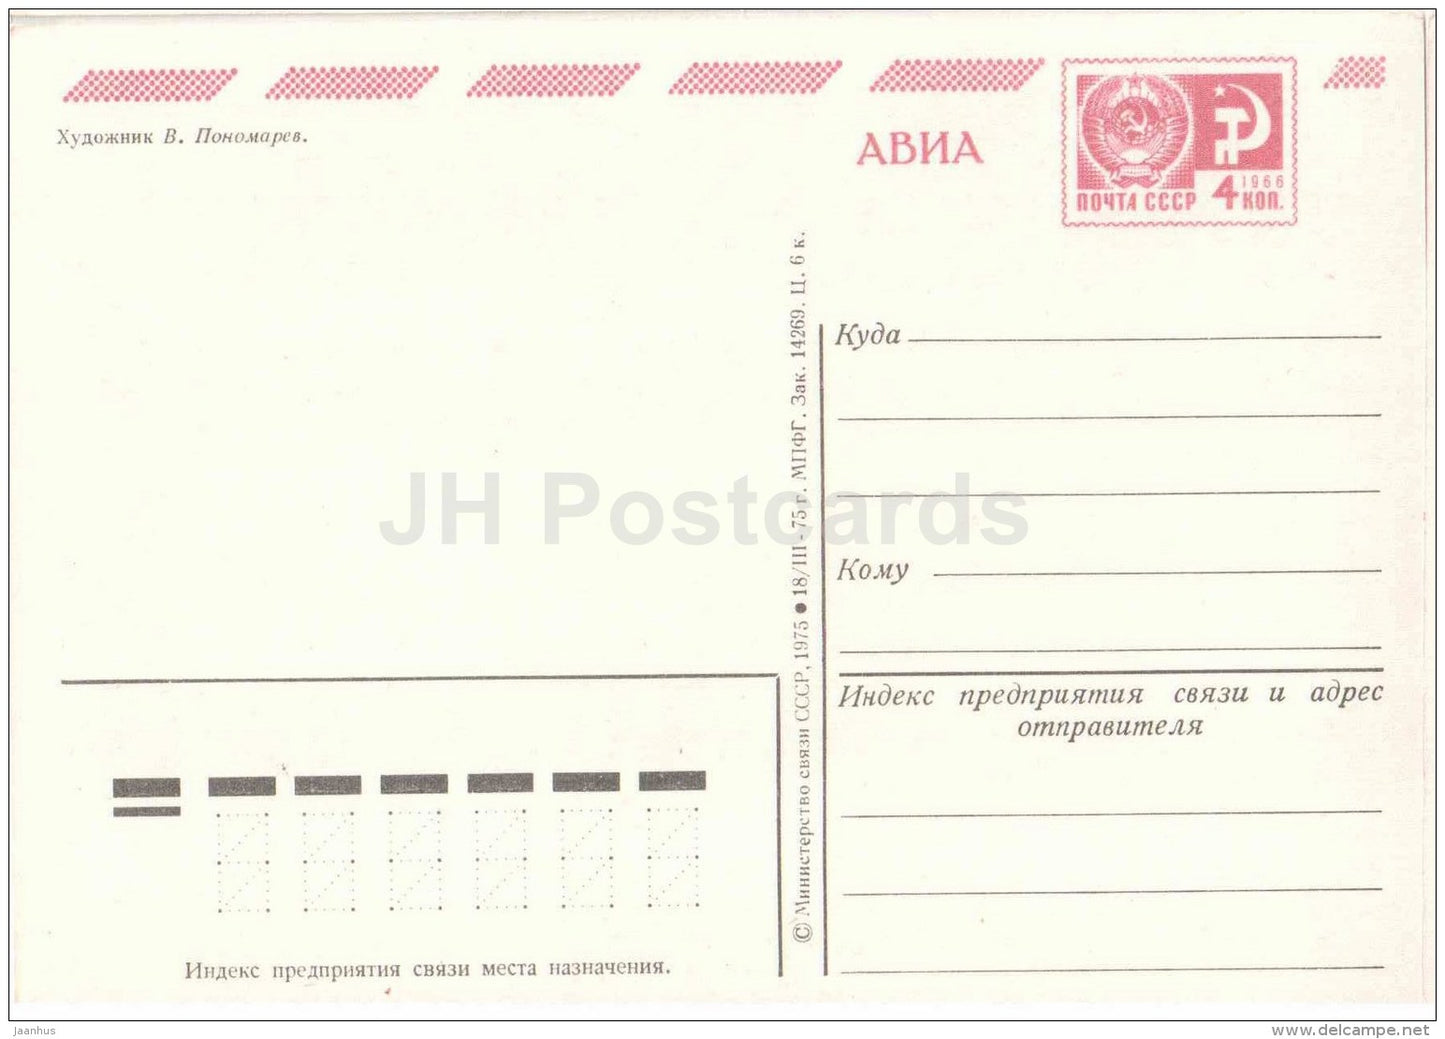 New Year Greeting card by V. Ponamaryev - Snegurochka - fir tree - postal stationery - 1975 - Russia USSR - unused - JH Postcards